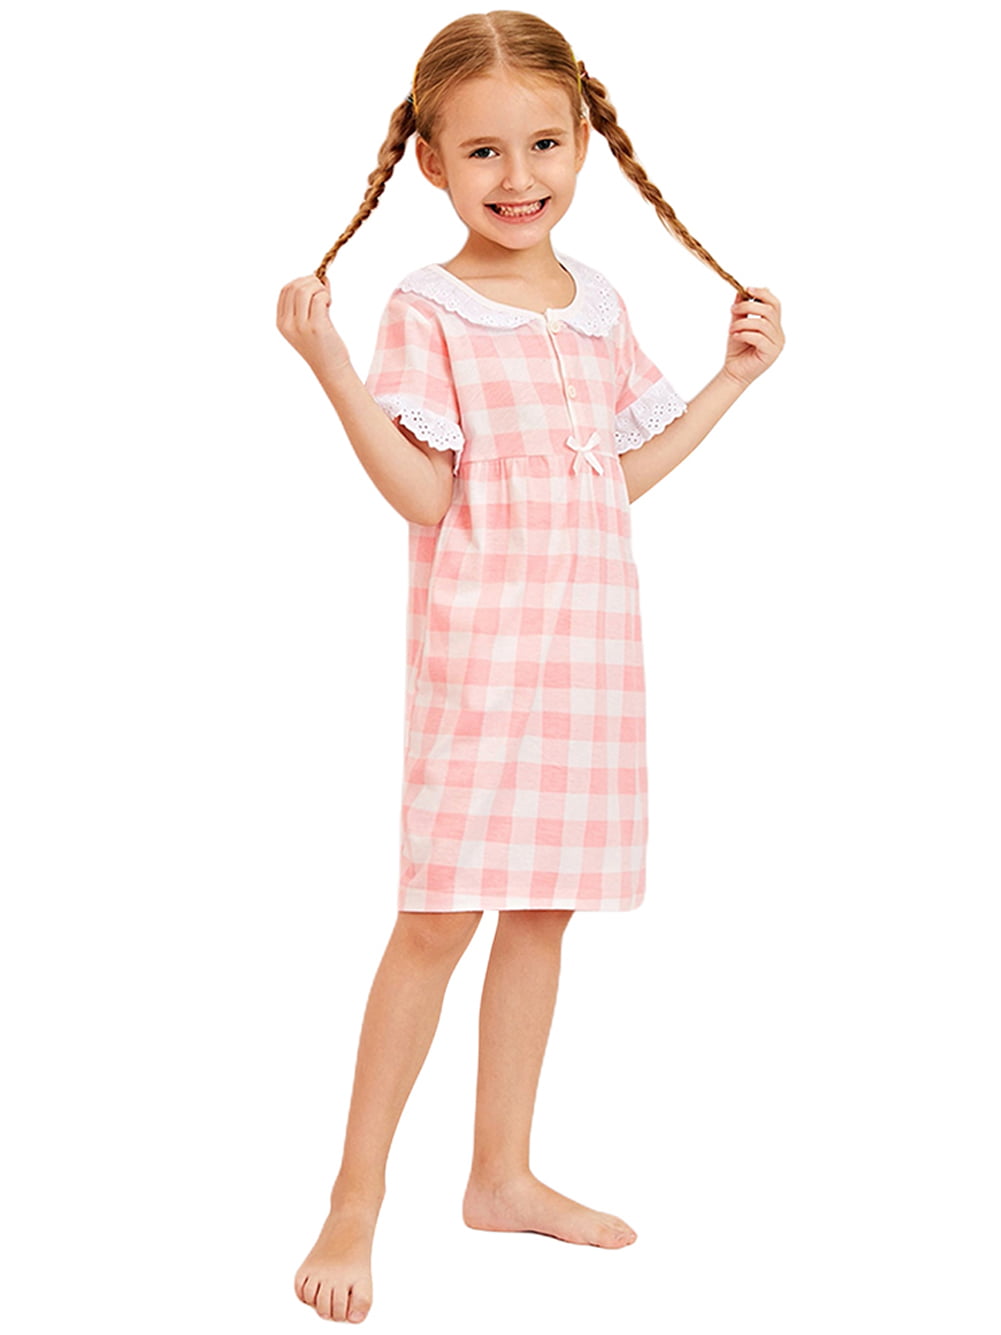 Casual Plaid Dress Short Sleeve Kids Dress Gingham Cotton Toddler Clothing Soft Breathable Cotton Dress Summer Girls Dresses